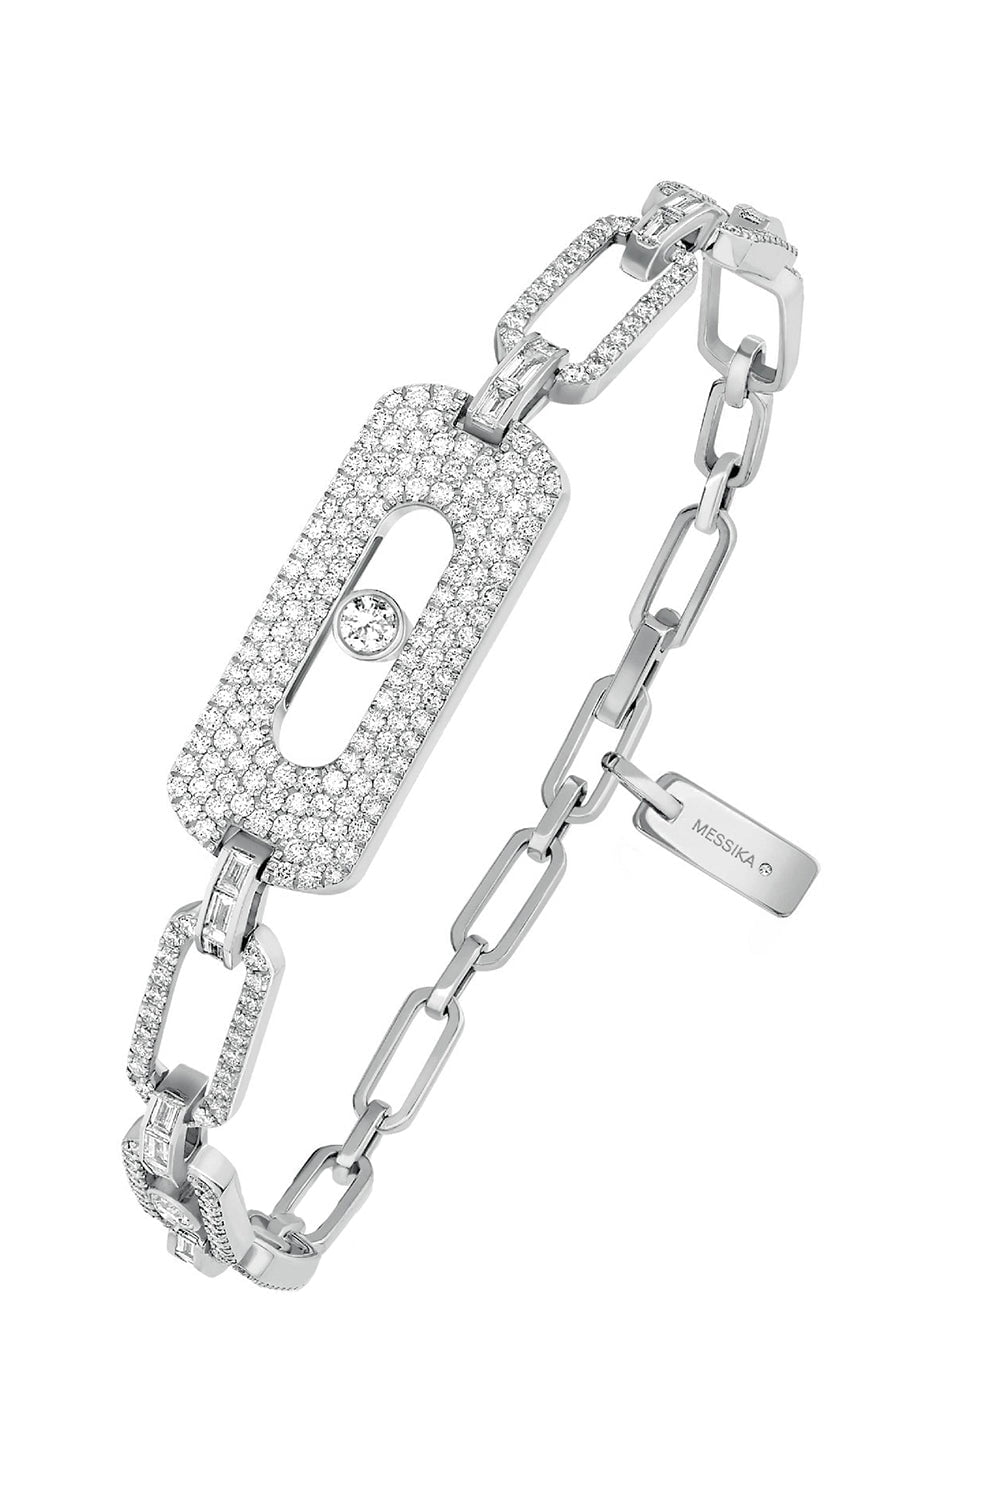 MESSIKA-My Move Pave Diamond Chain Bracelet-WHITE GOLD